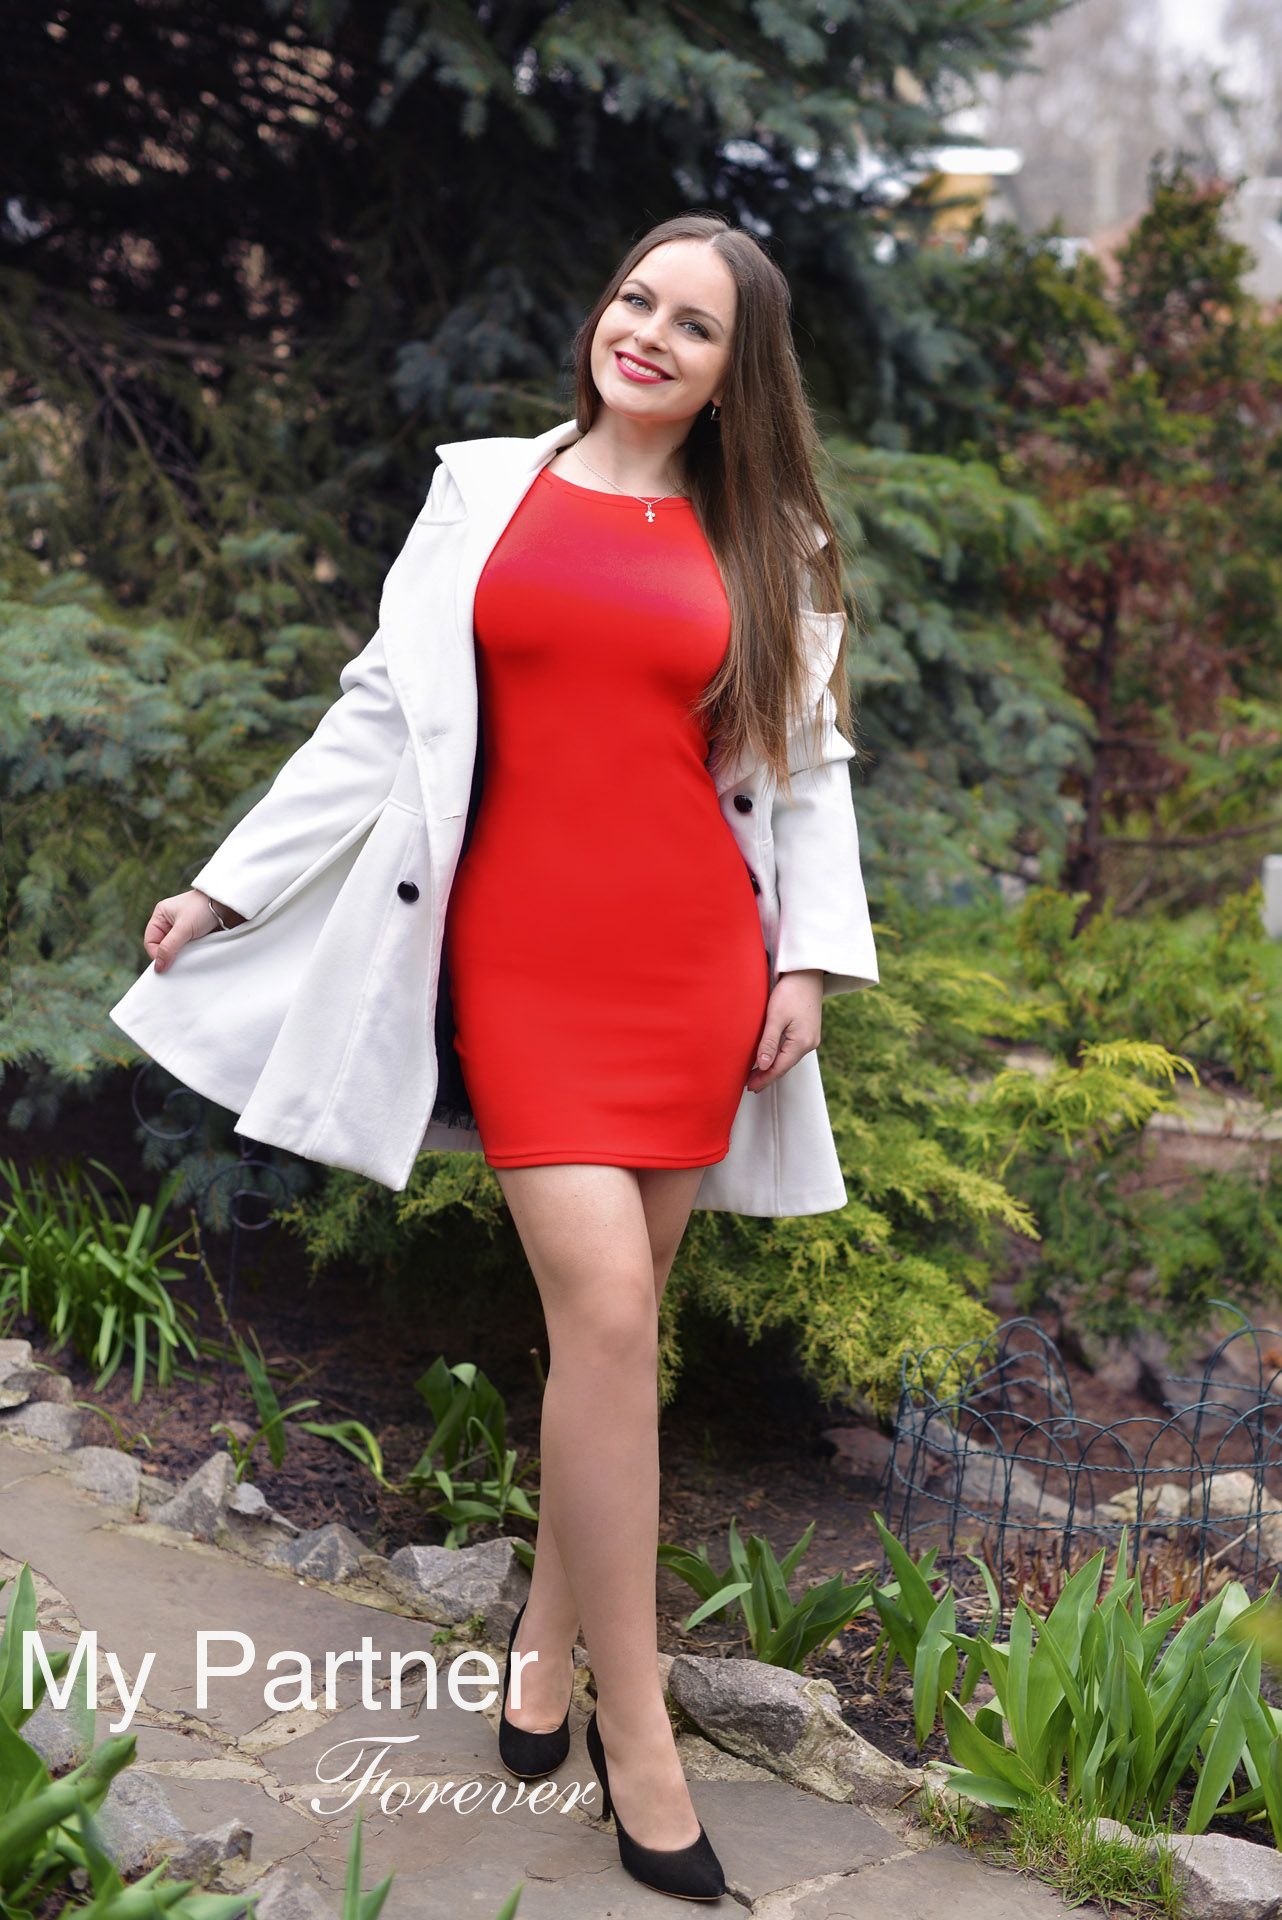 Meet Single Ukrainian Girl Alina from Kharkov, Ukraine